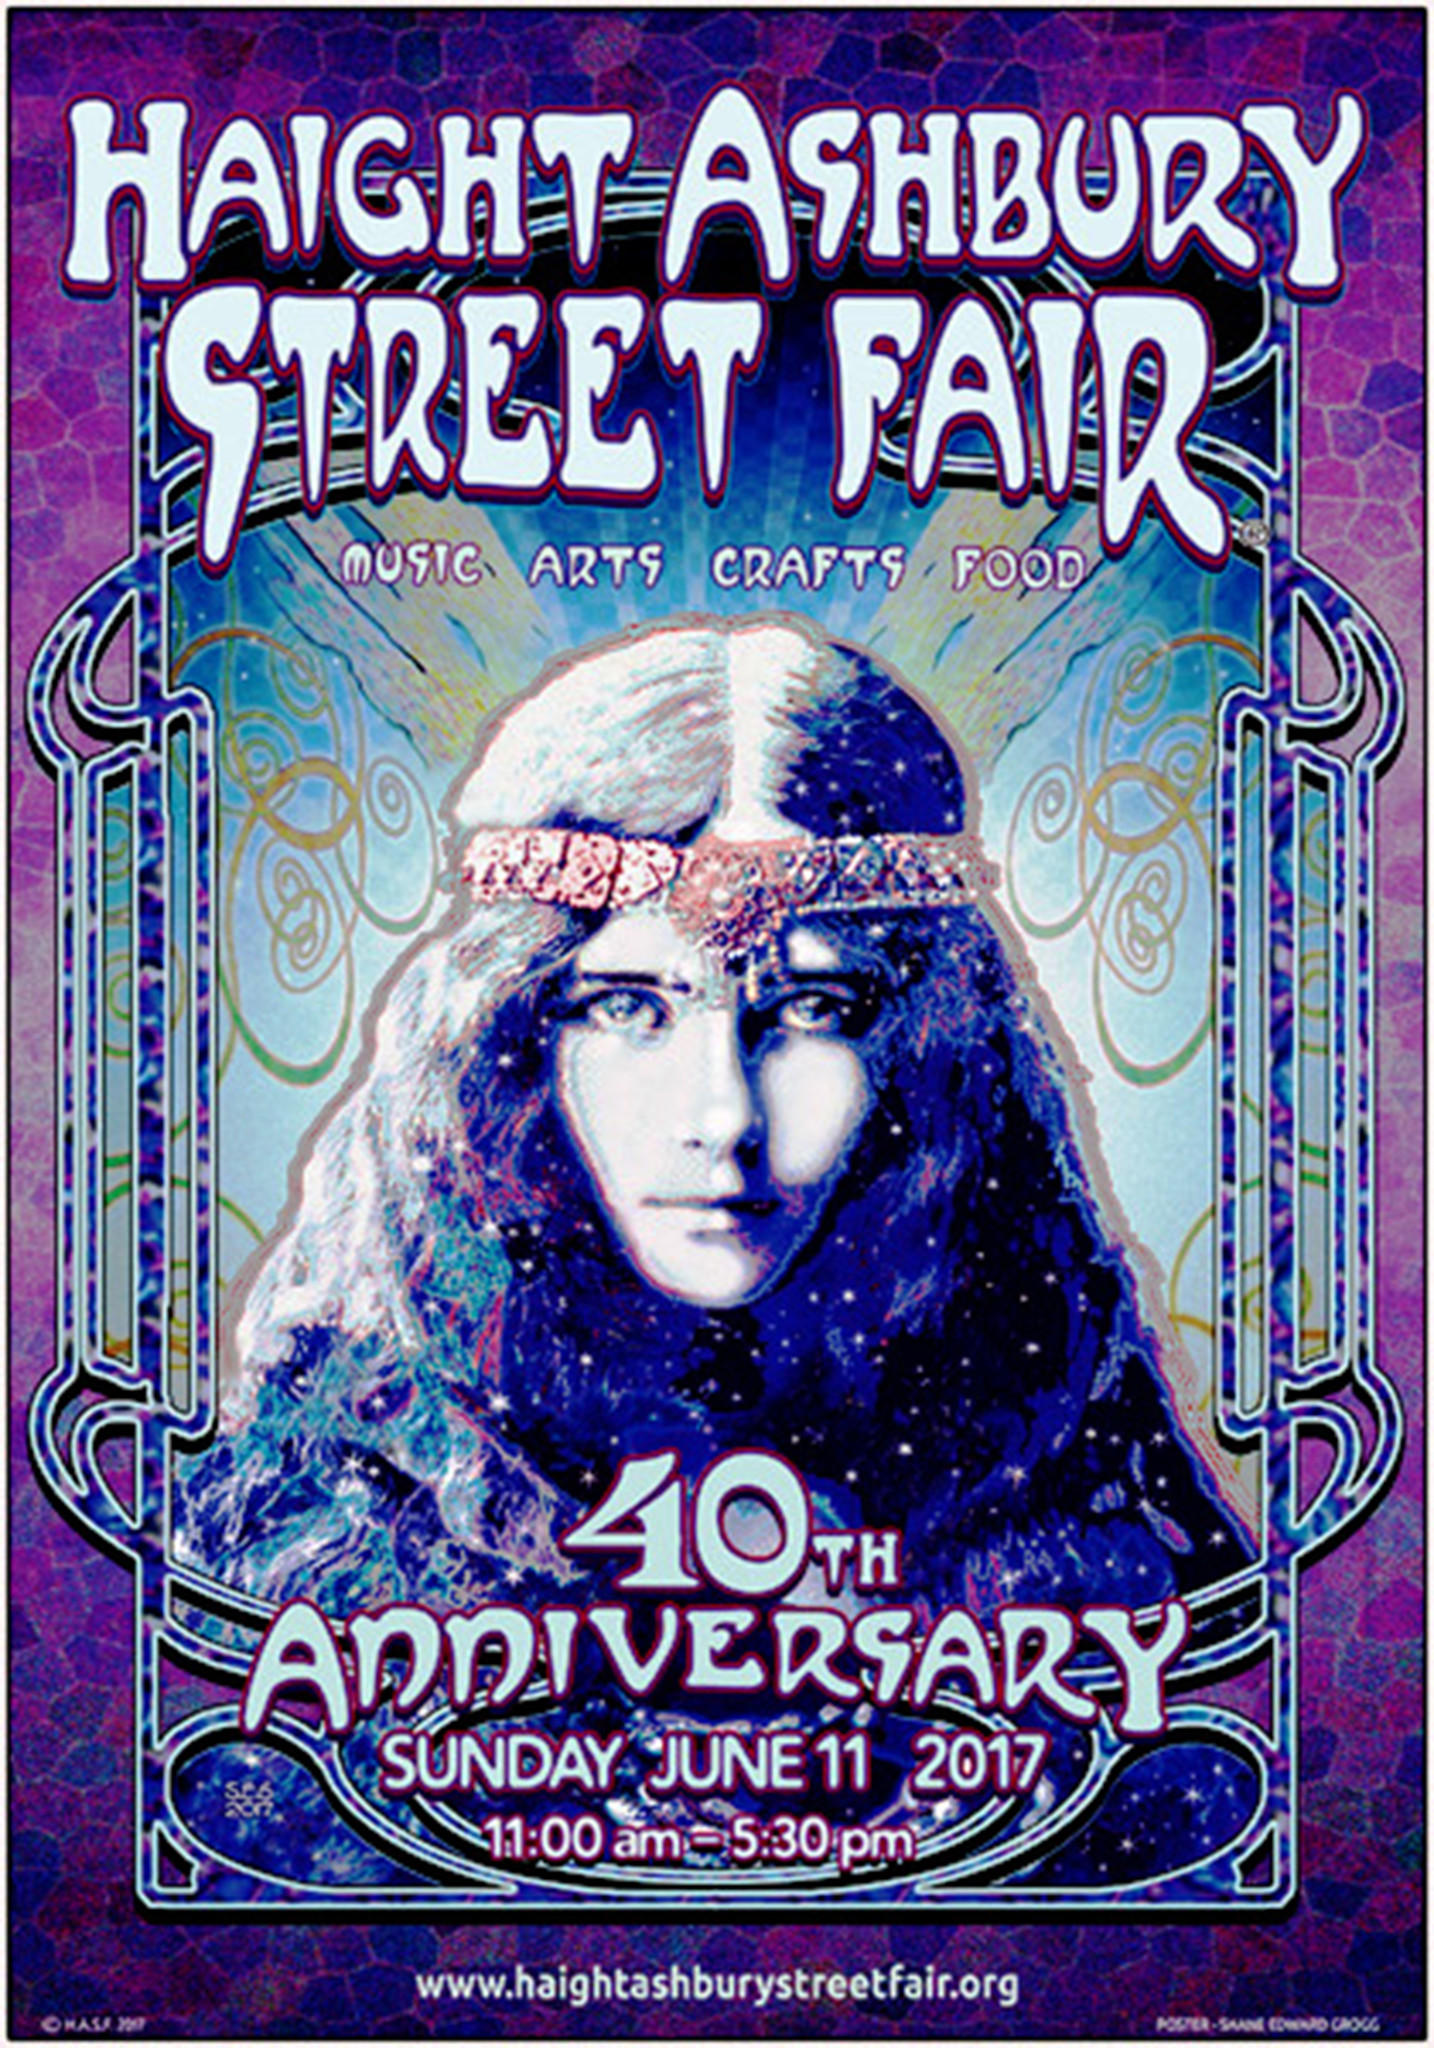 Haight Ashbury Street Fair 40th anniversary poster by Shane Edward Grogg.